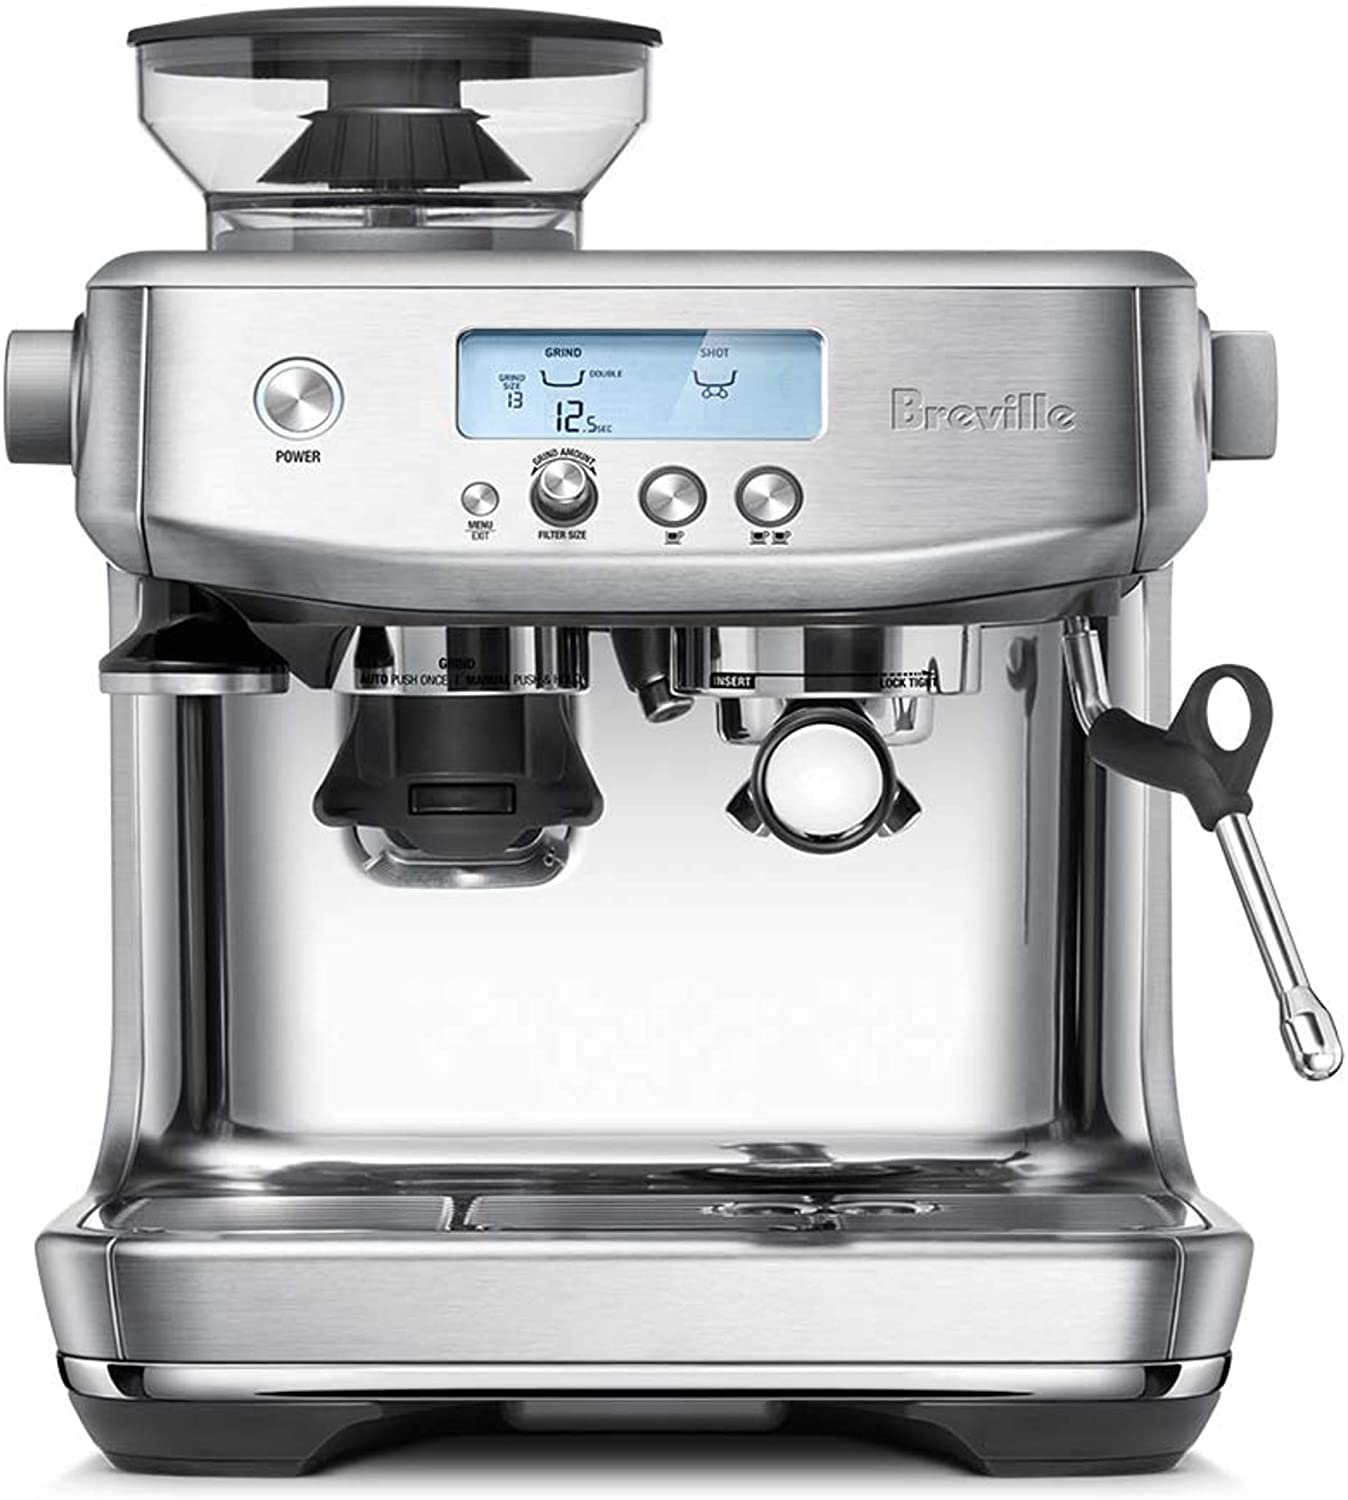 Breville BES878BSS Barista Pro Espresso Machine Review